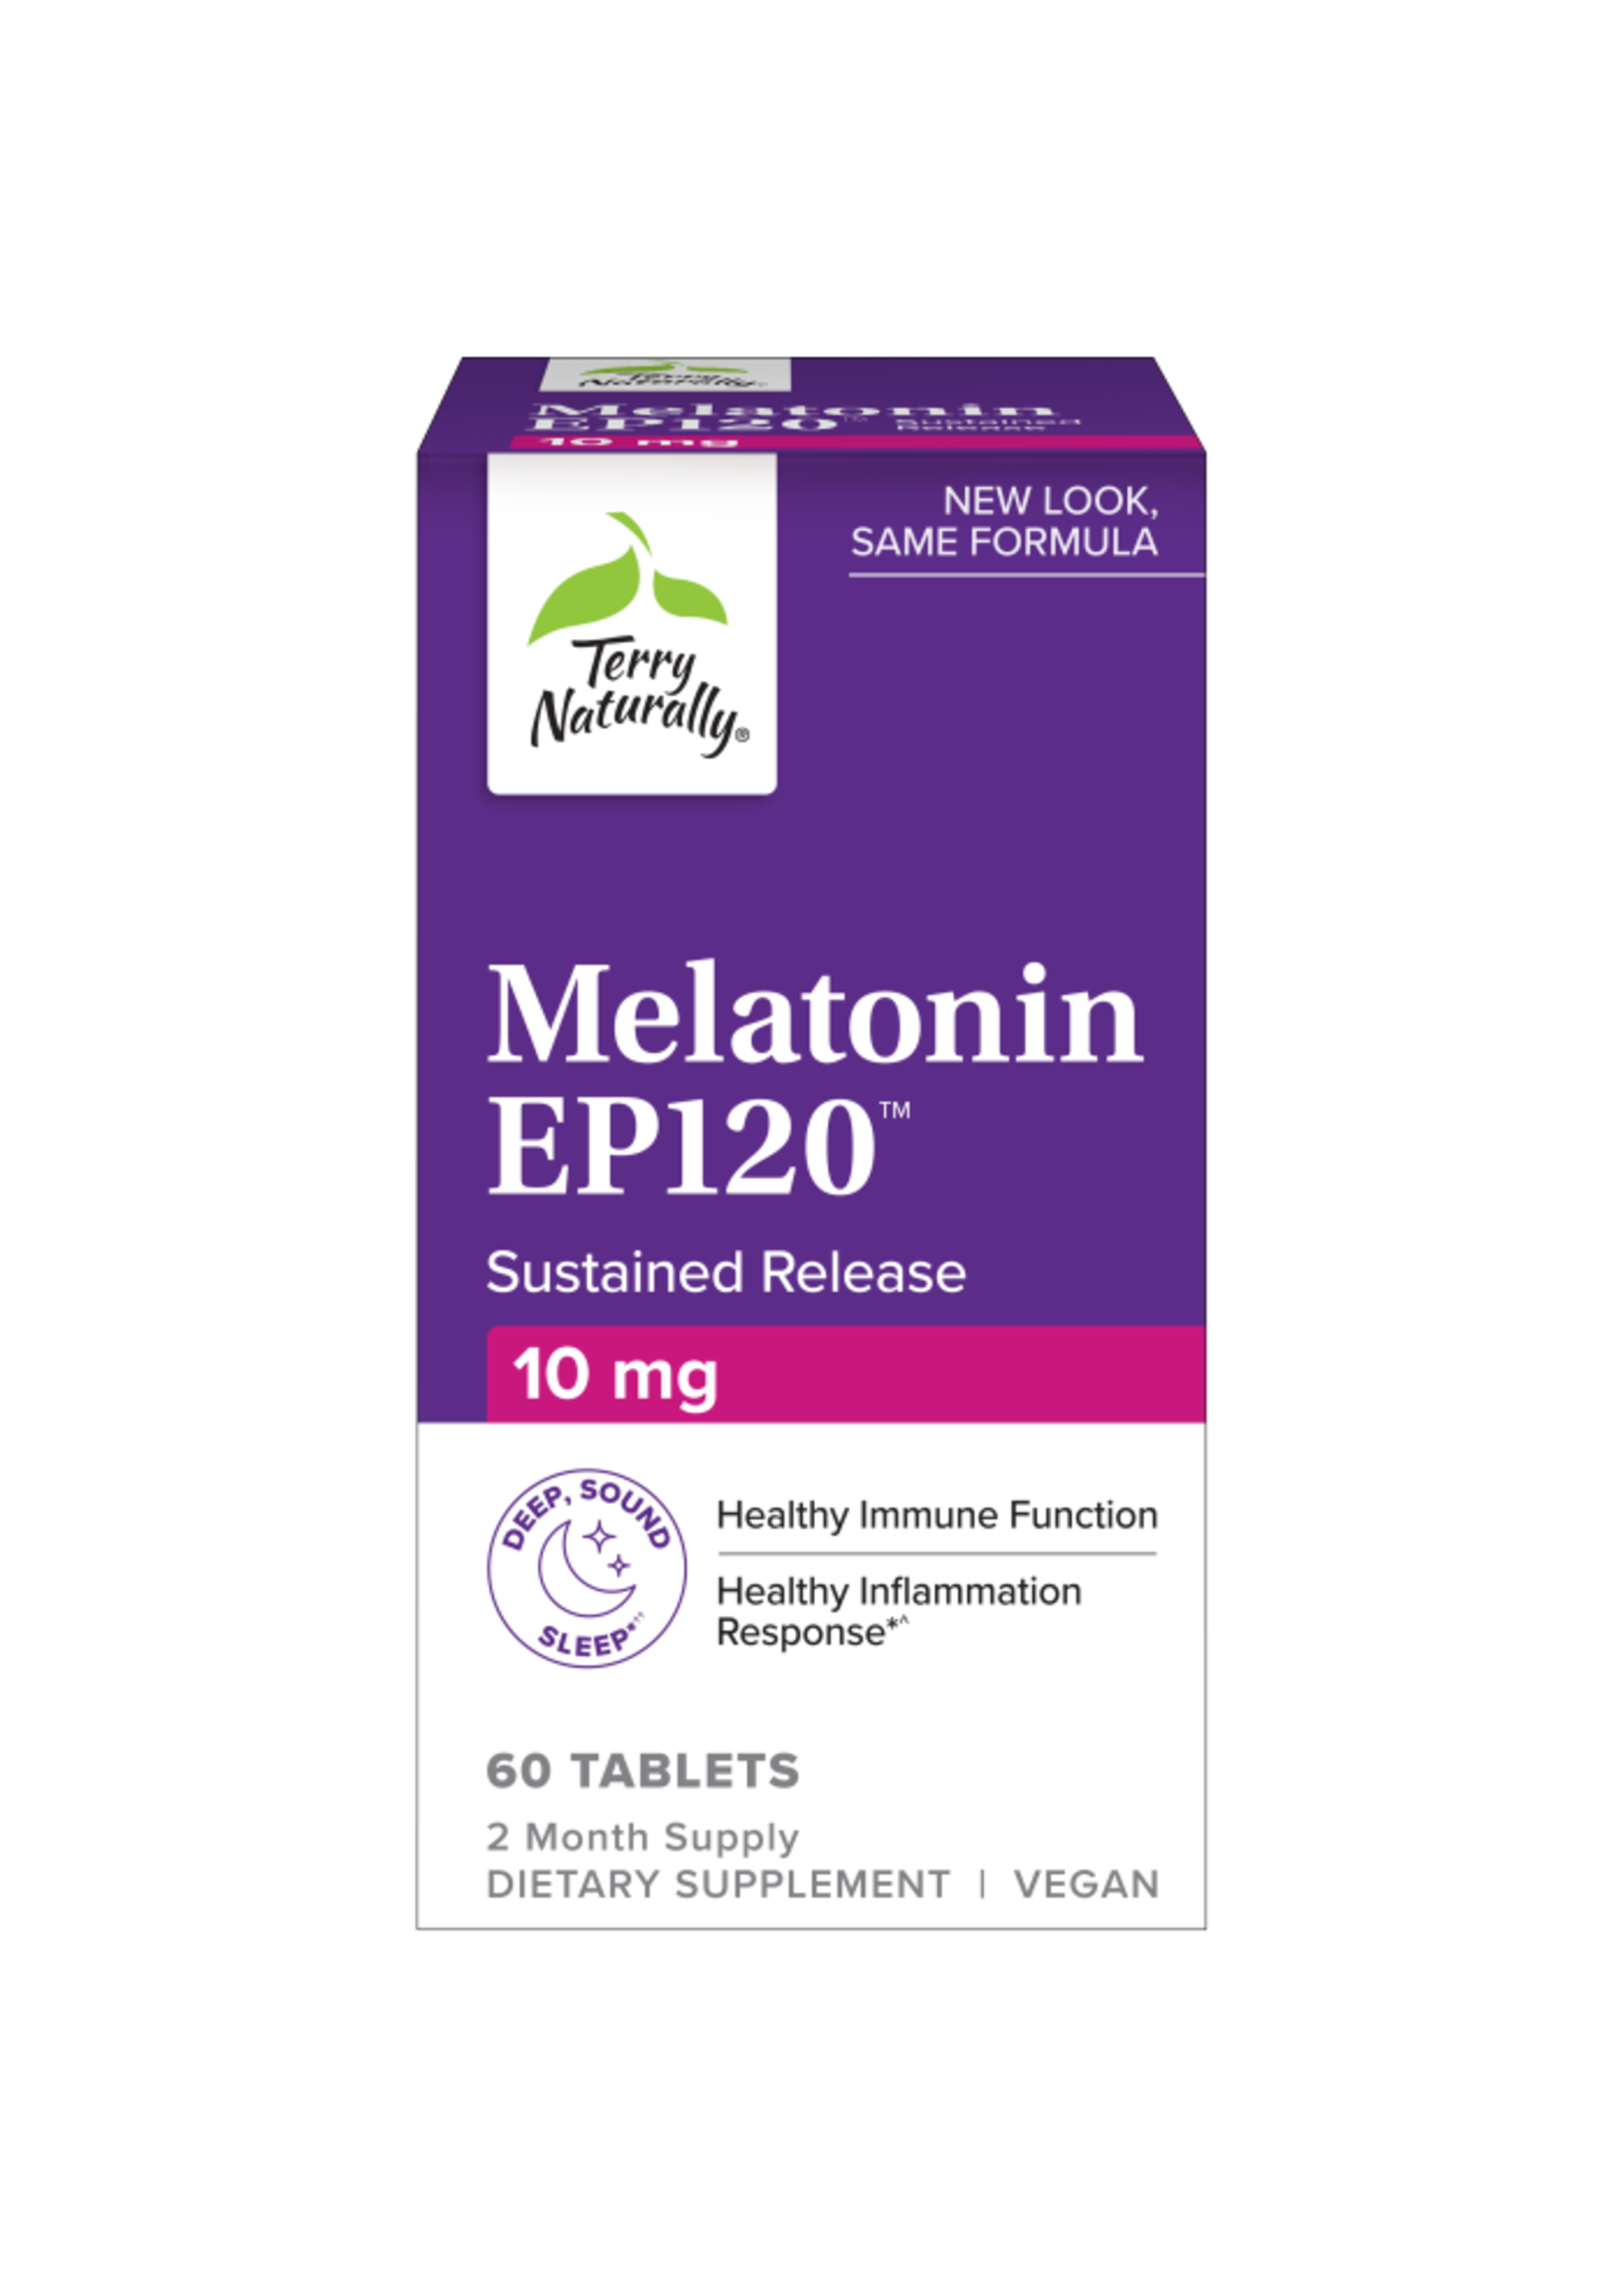 Melatonin EP120™ 10 mg Sustained Release